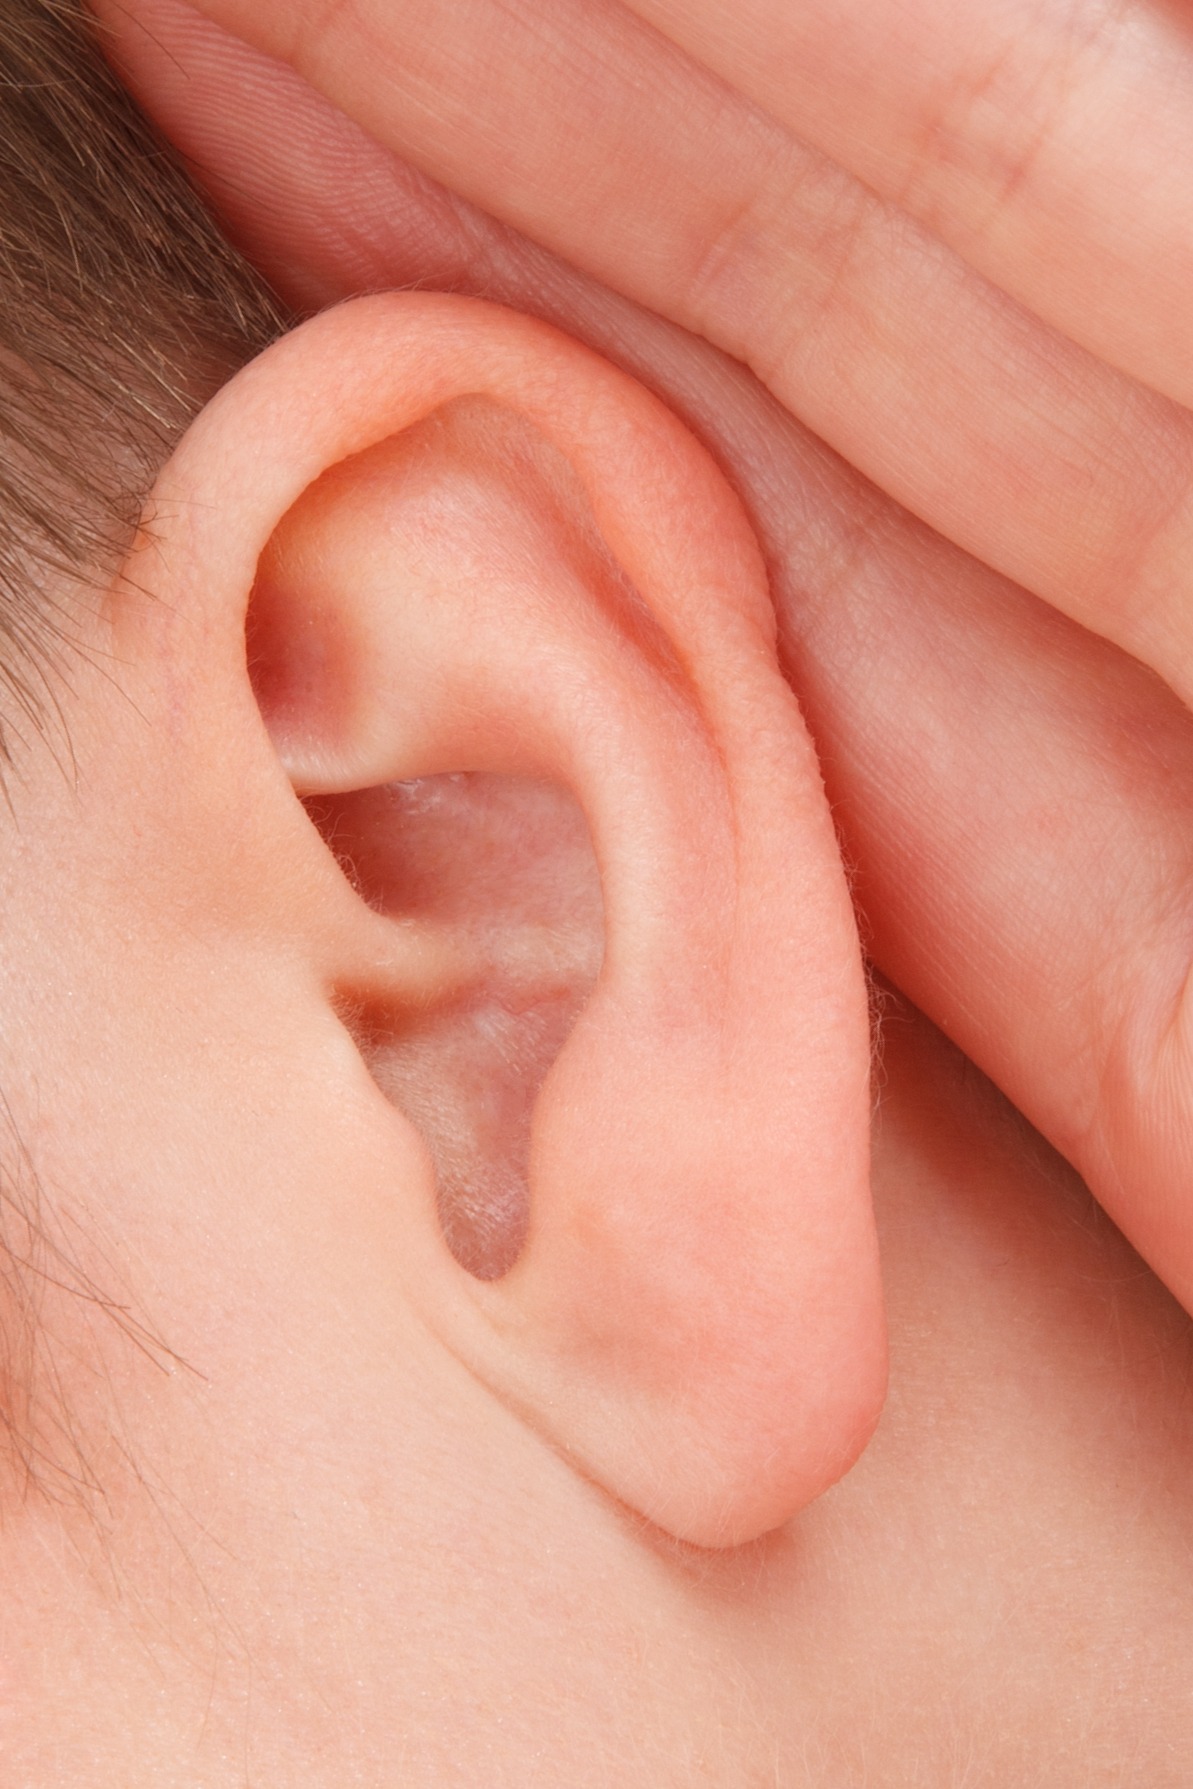 children common illnesses blue-babies ear infection